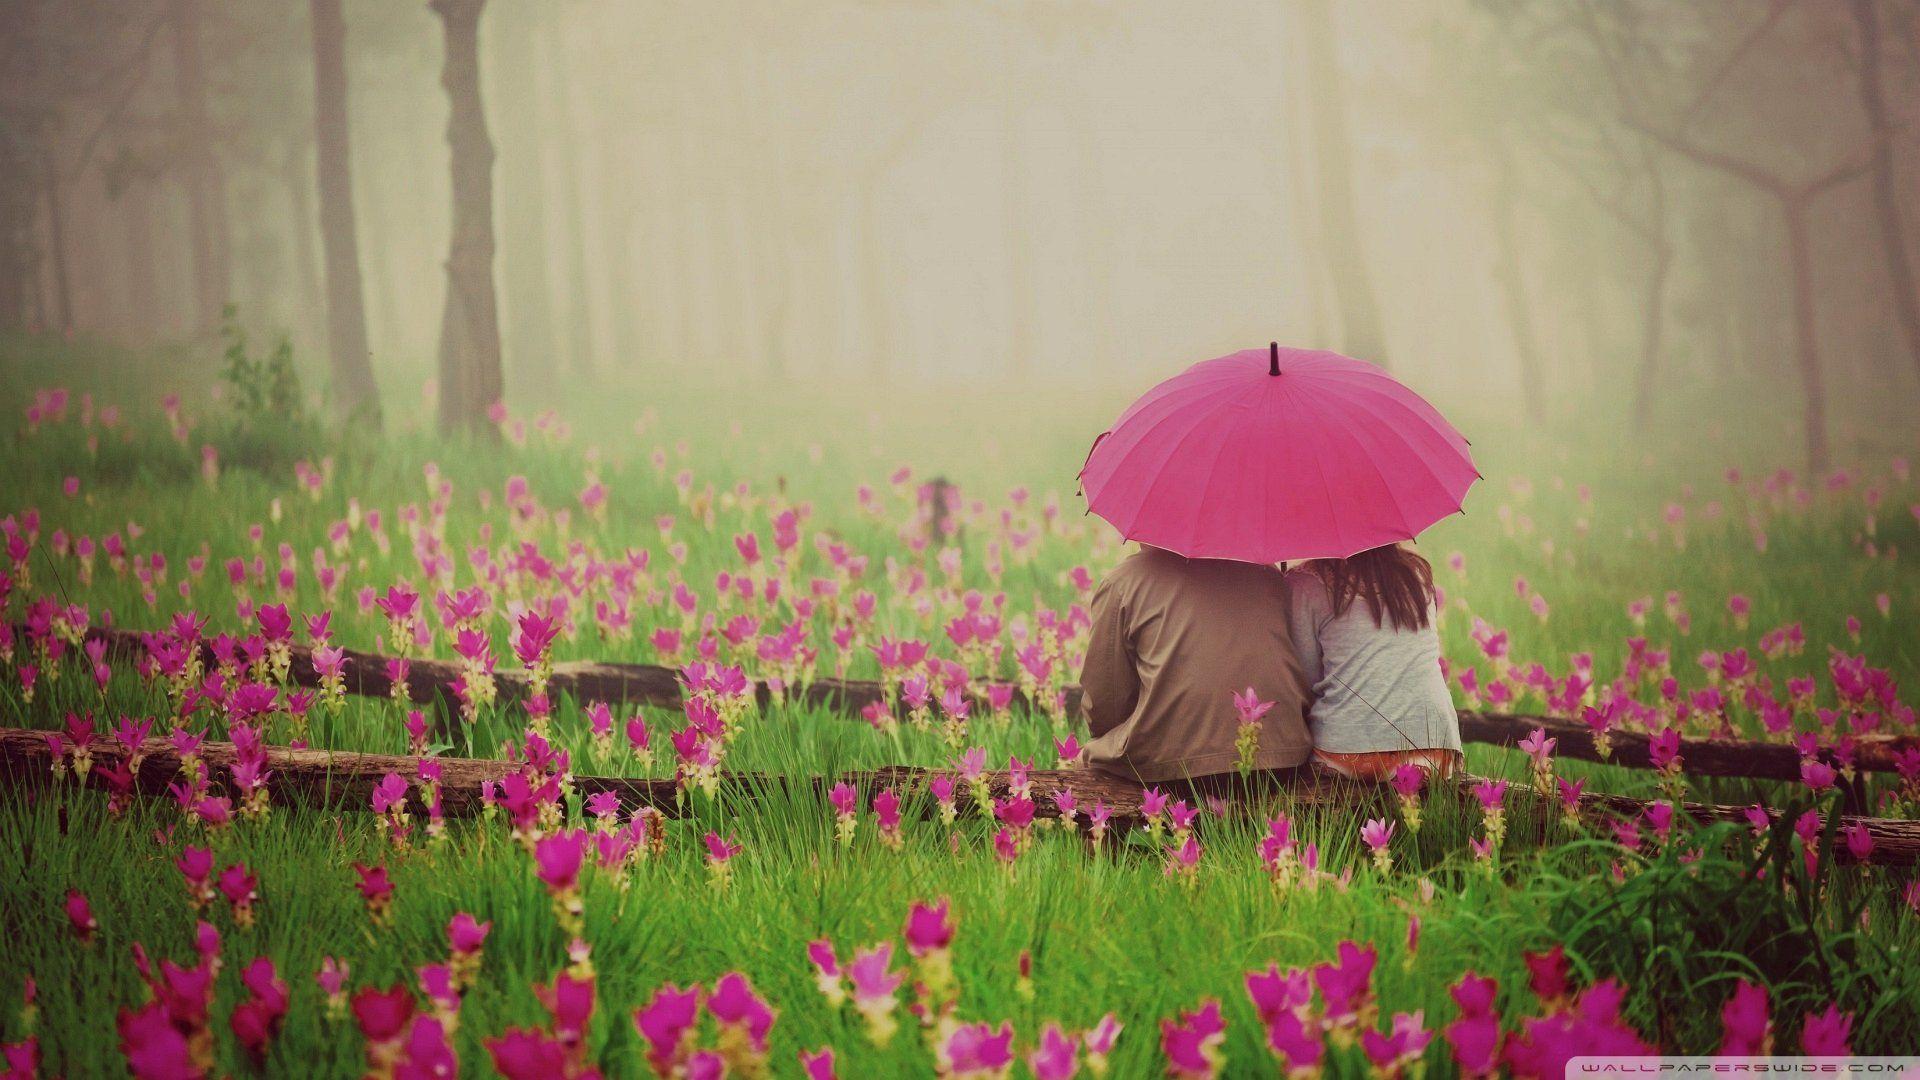 Wallpaper Romantic Couple Under Umbrella 1920 X 1080 Full HD